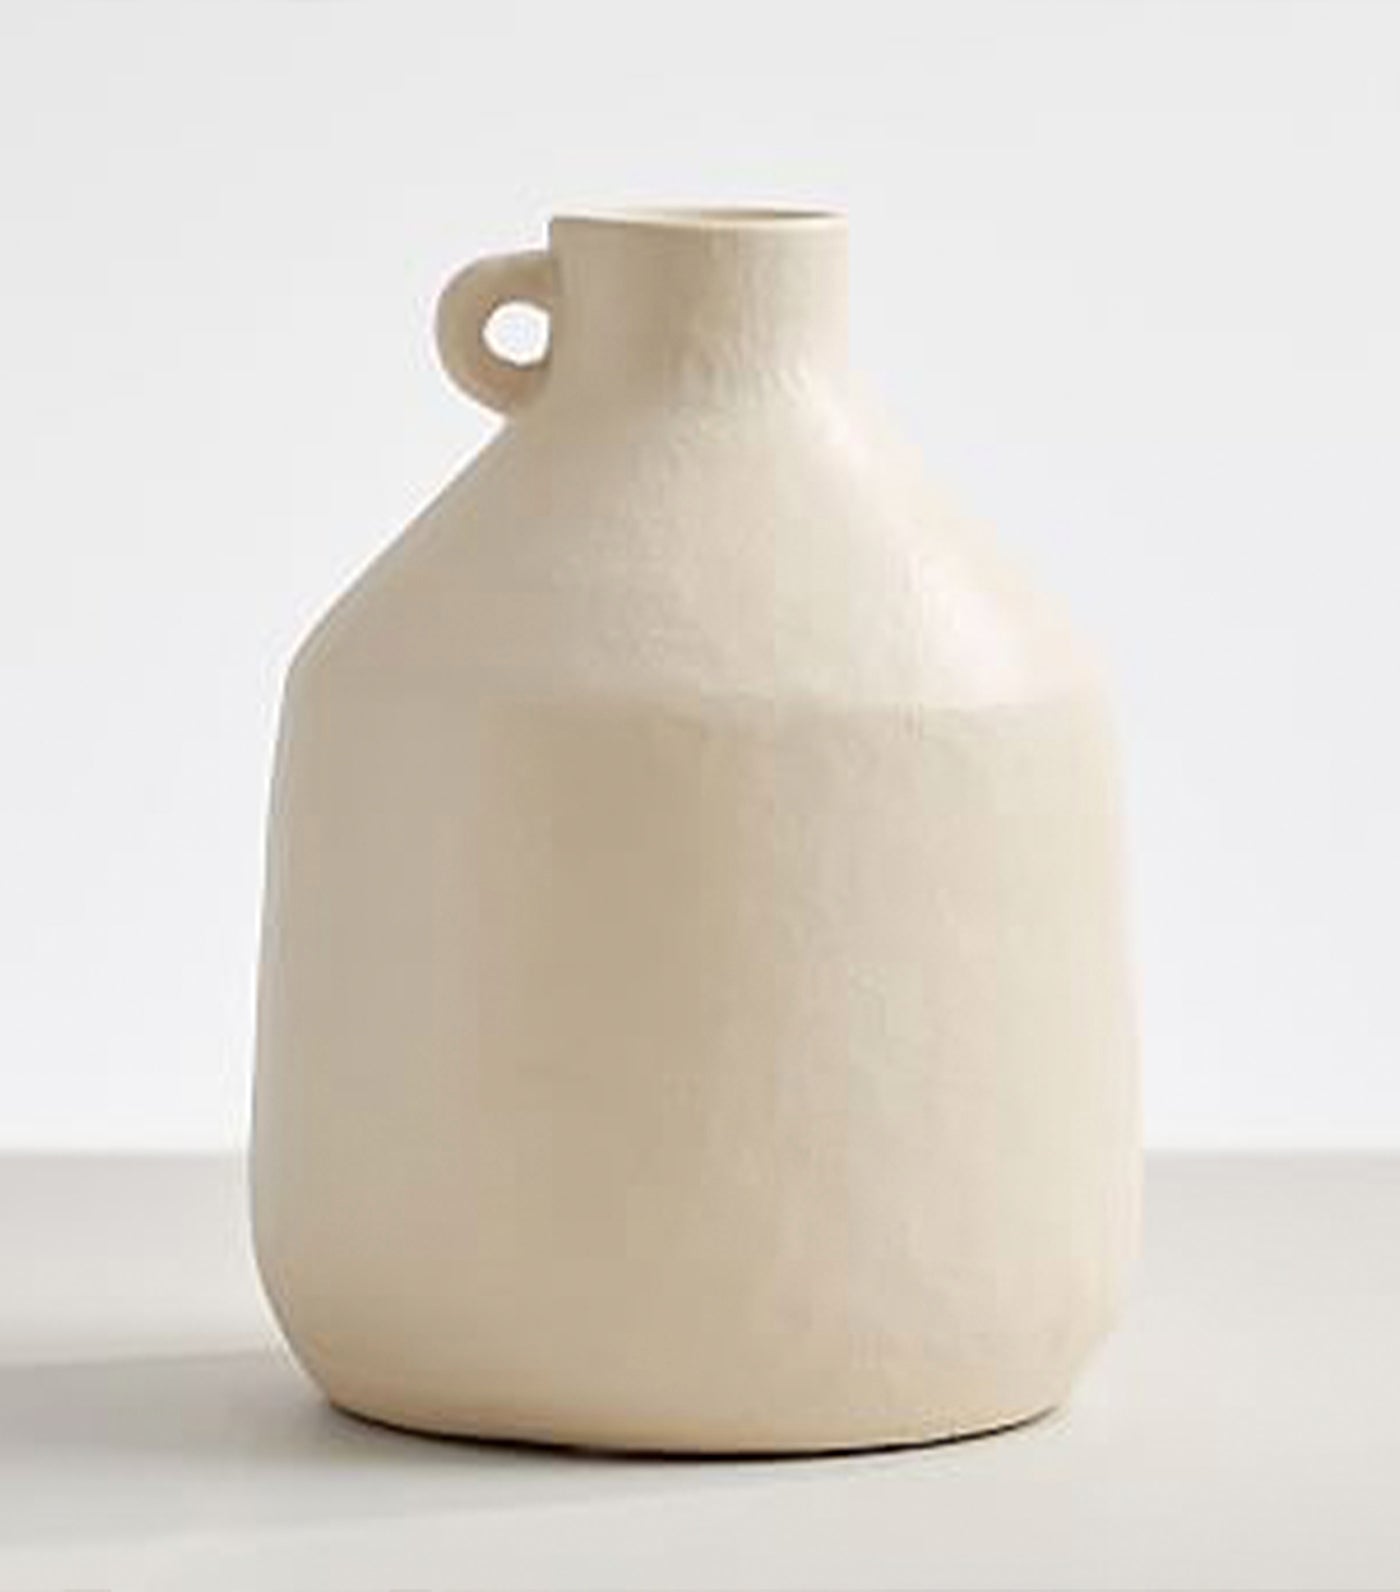 Pottery Barn Studio Vase Collection